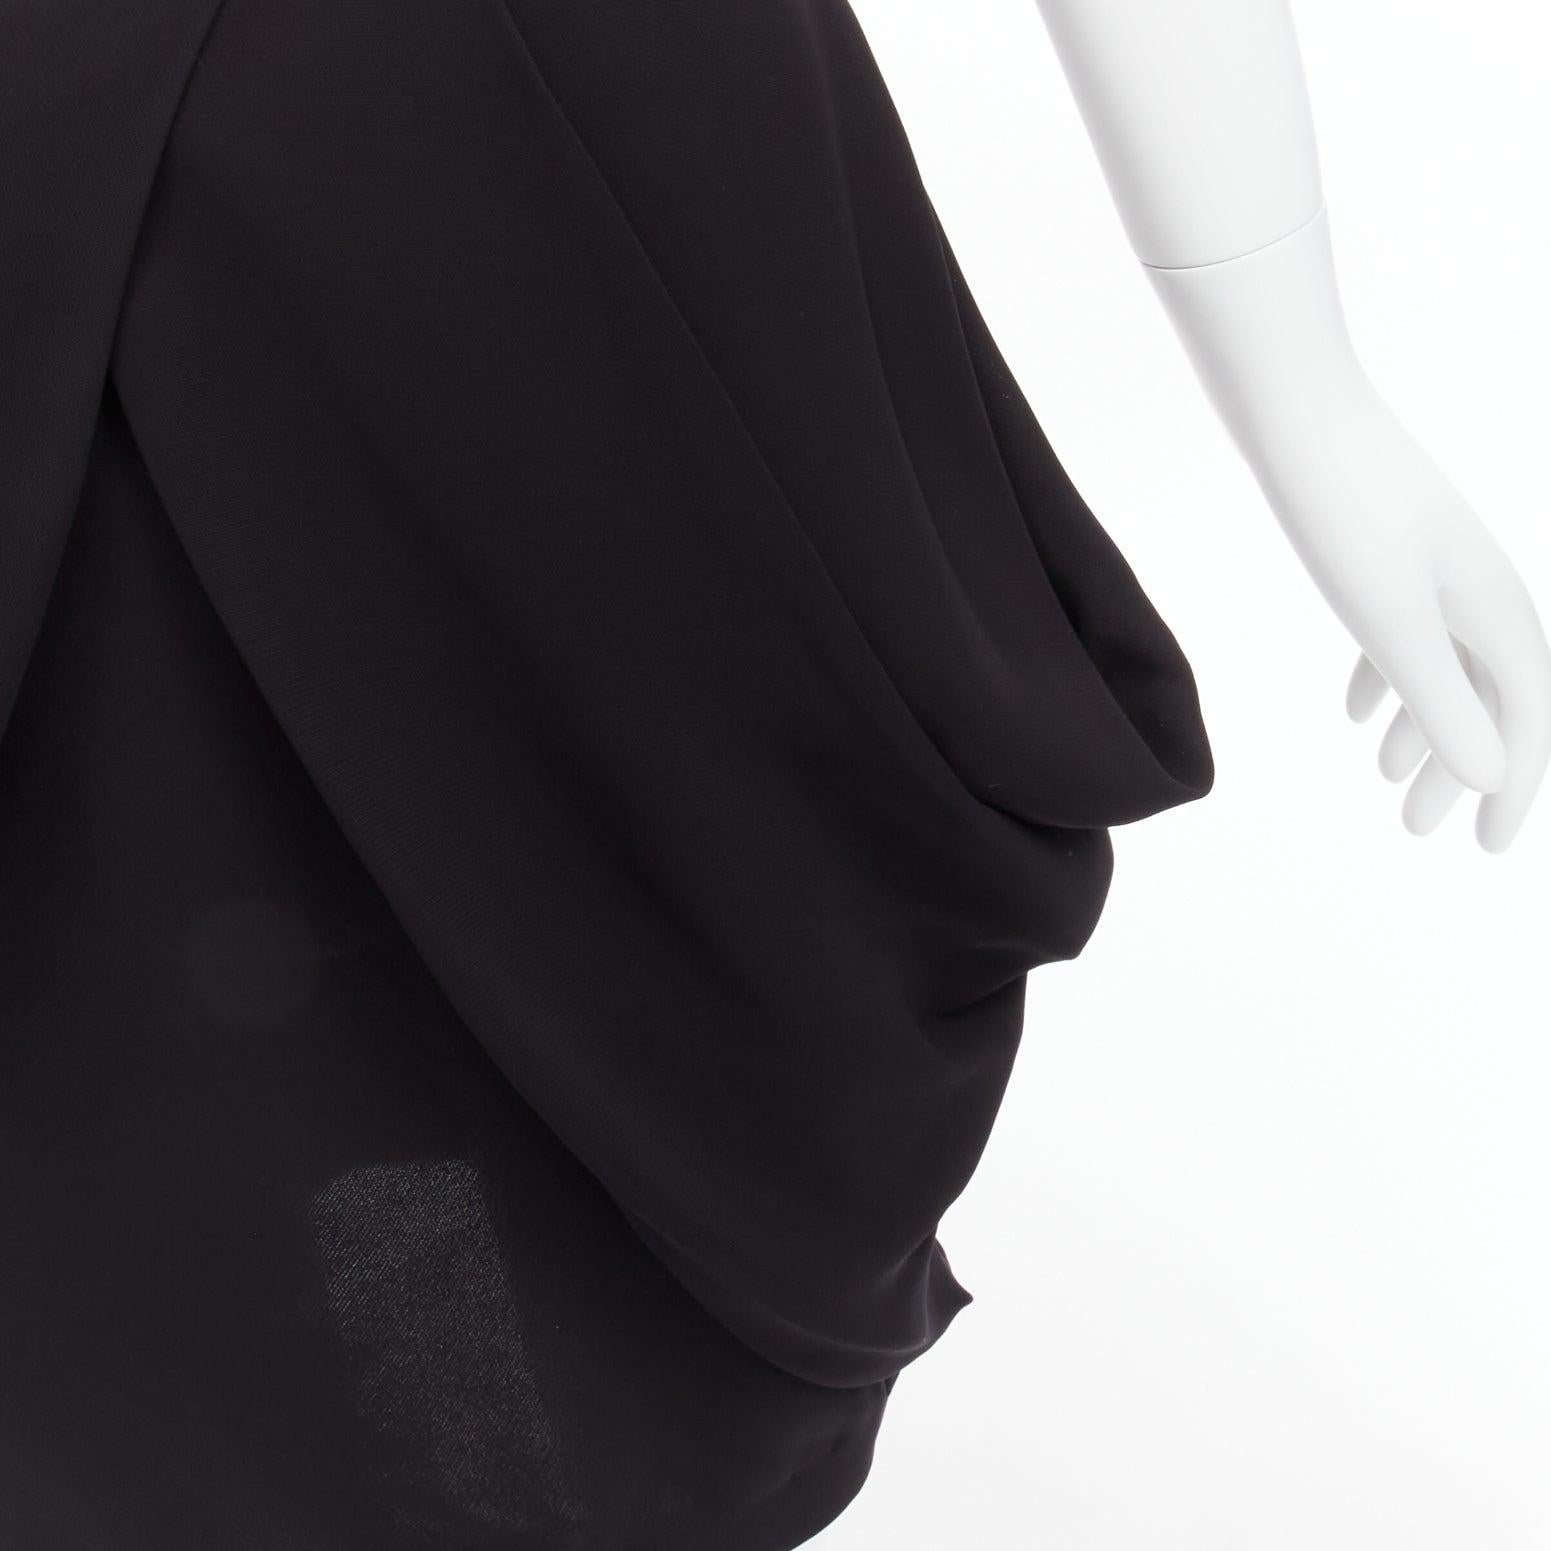 MIU MIU black asymmetric draped high waisted mini tulip skirt IT38 XS
Reference: VACN/A00040
Brand: Miu Miu
Designer: Miuccia Prada
Material: Feels like silk
Color: Black
Pattern: Solid
Closure: Zip
Lining: Black Fabric
Extra Details: Back zip